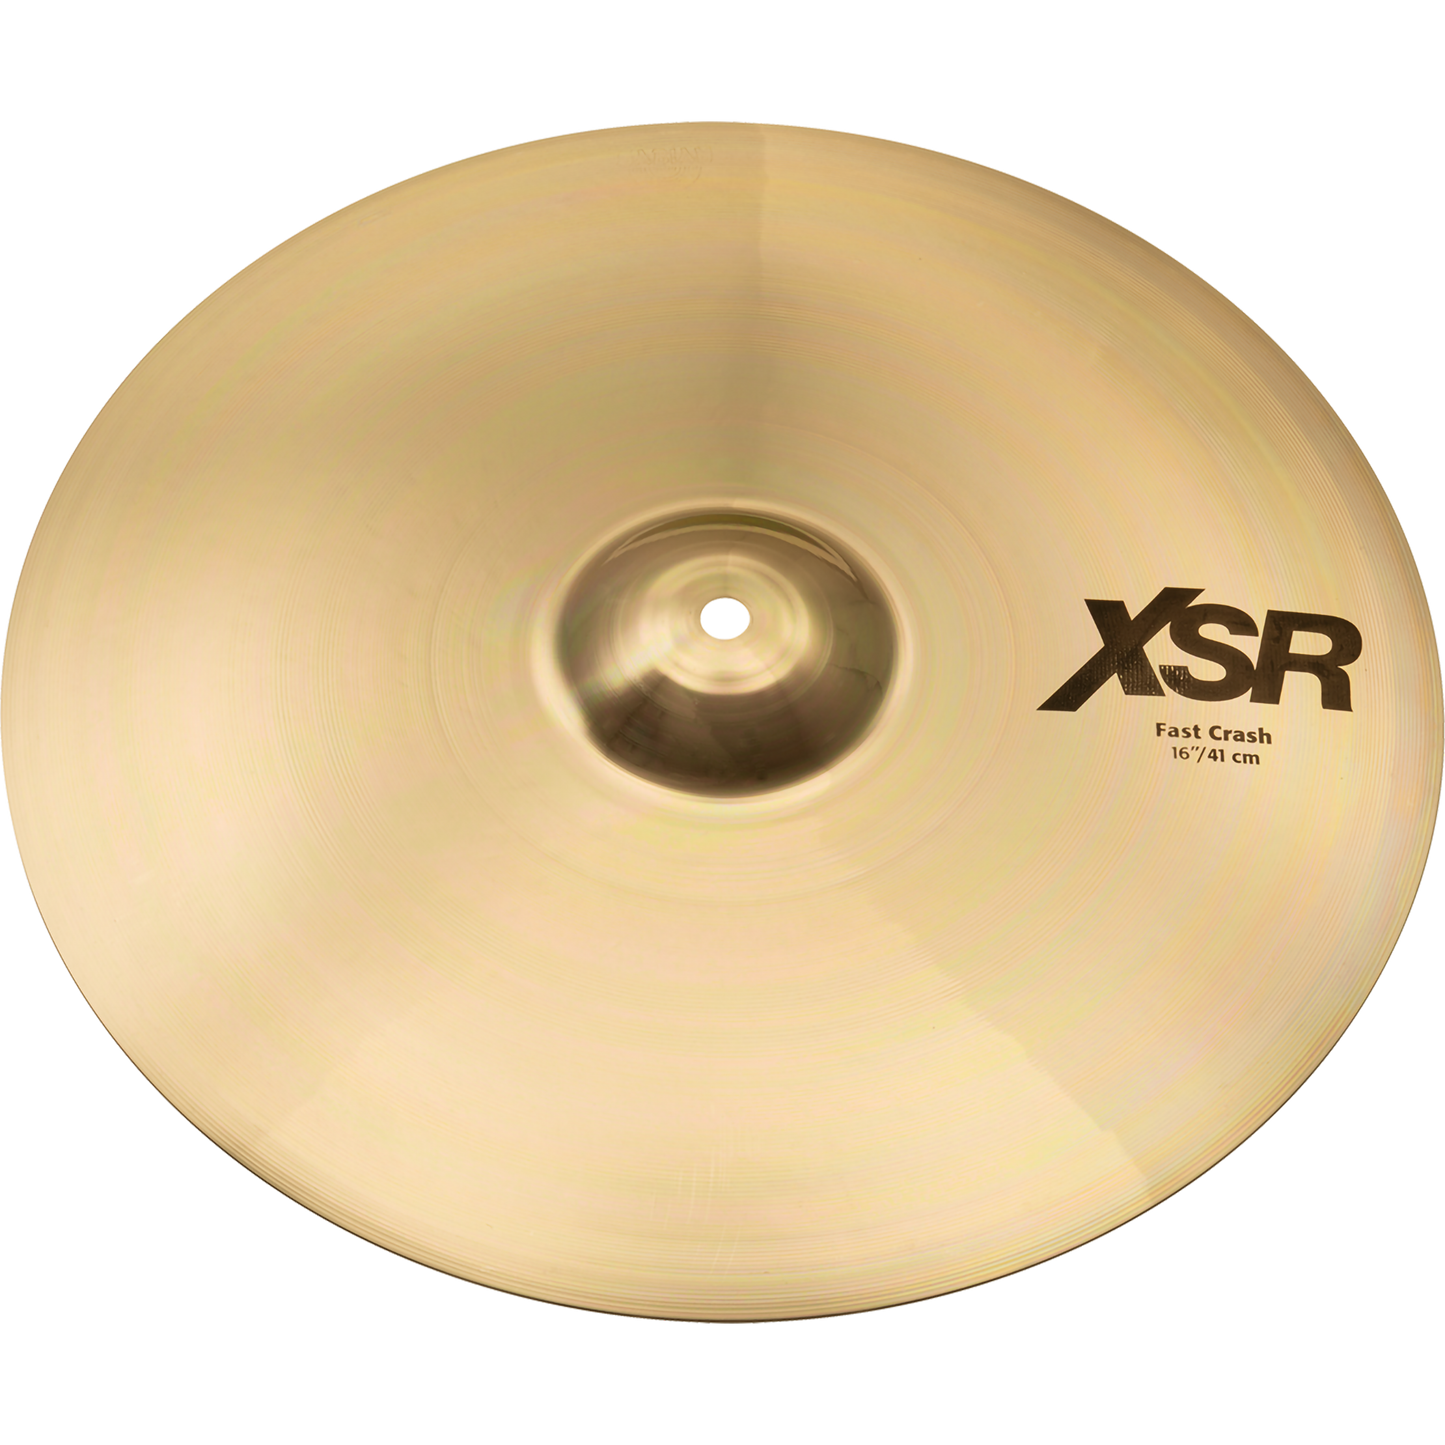 Sabian 16” XSR Fast Crash Cymbal